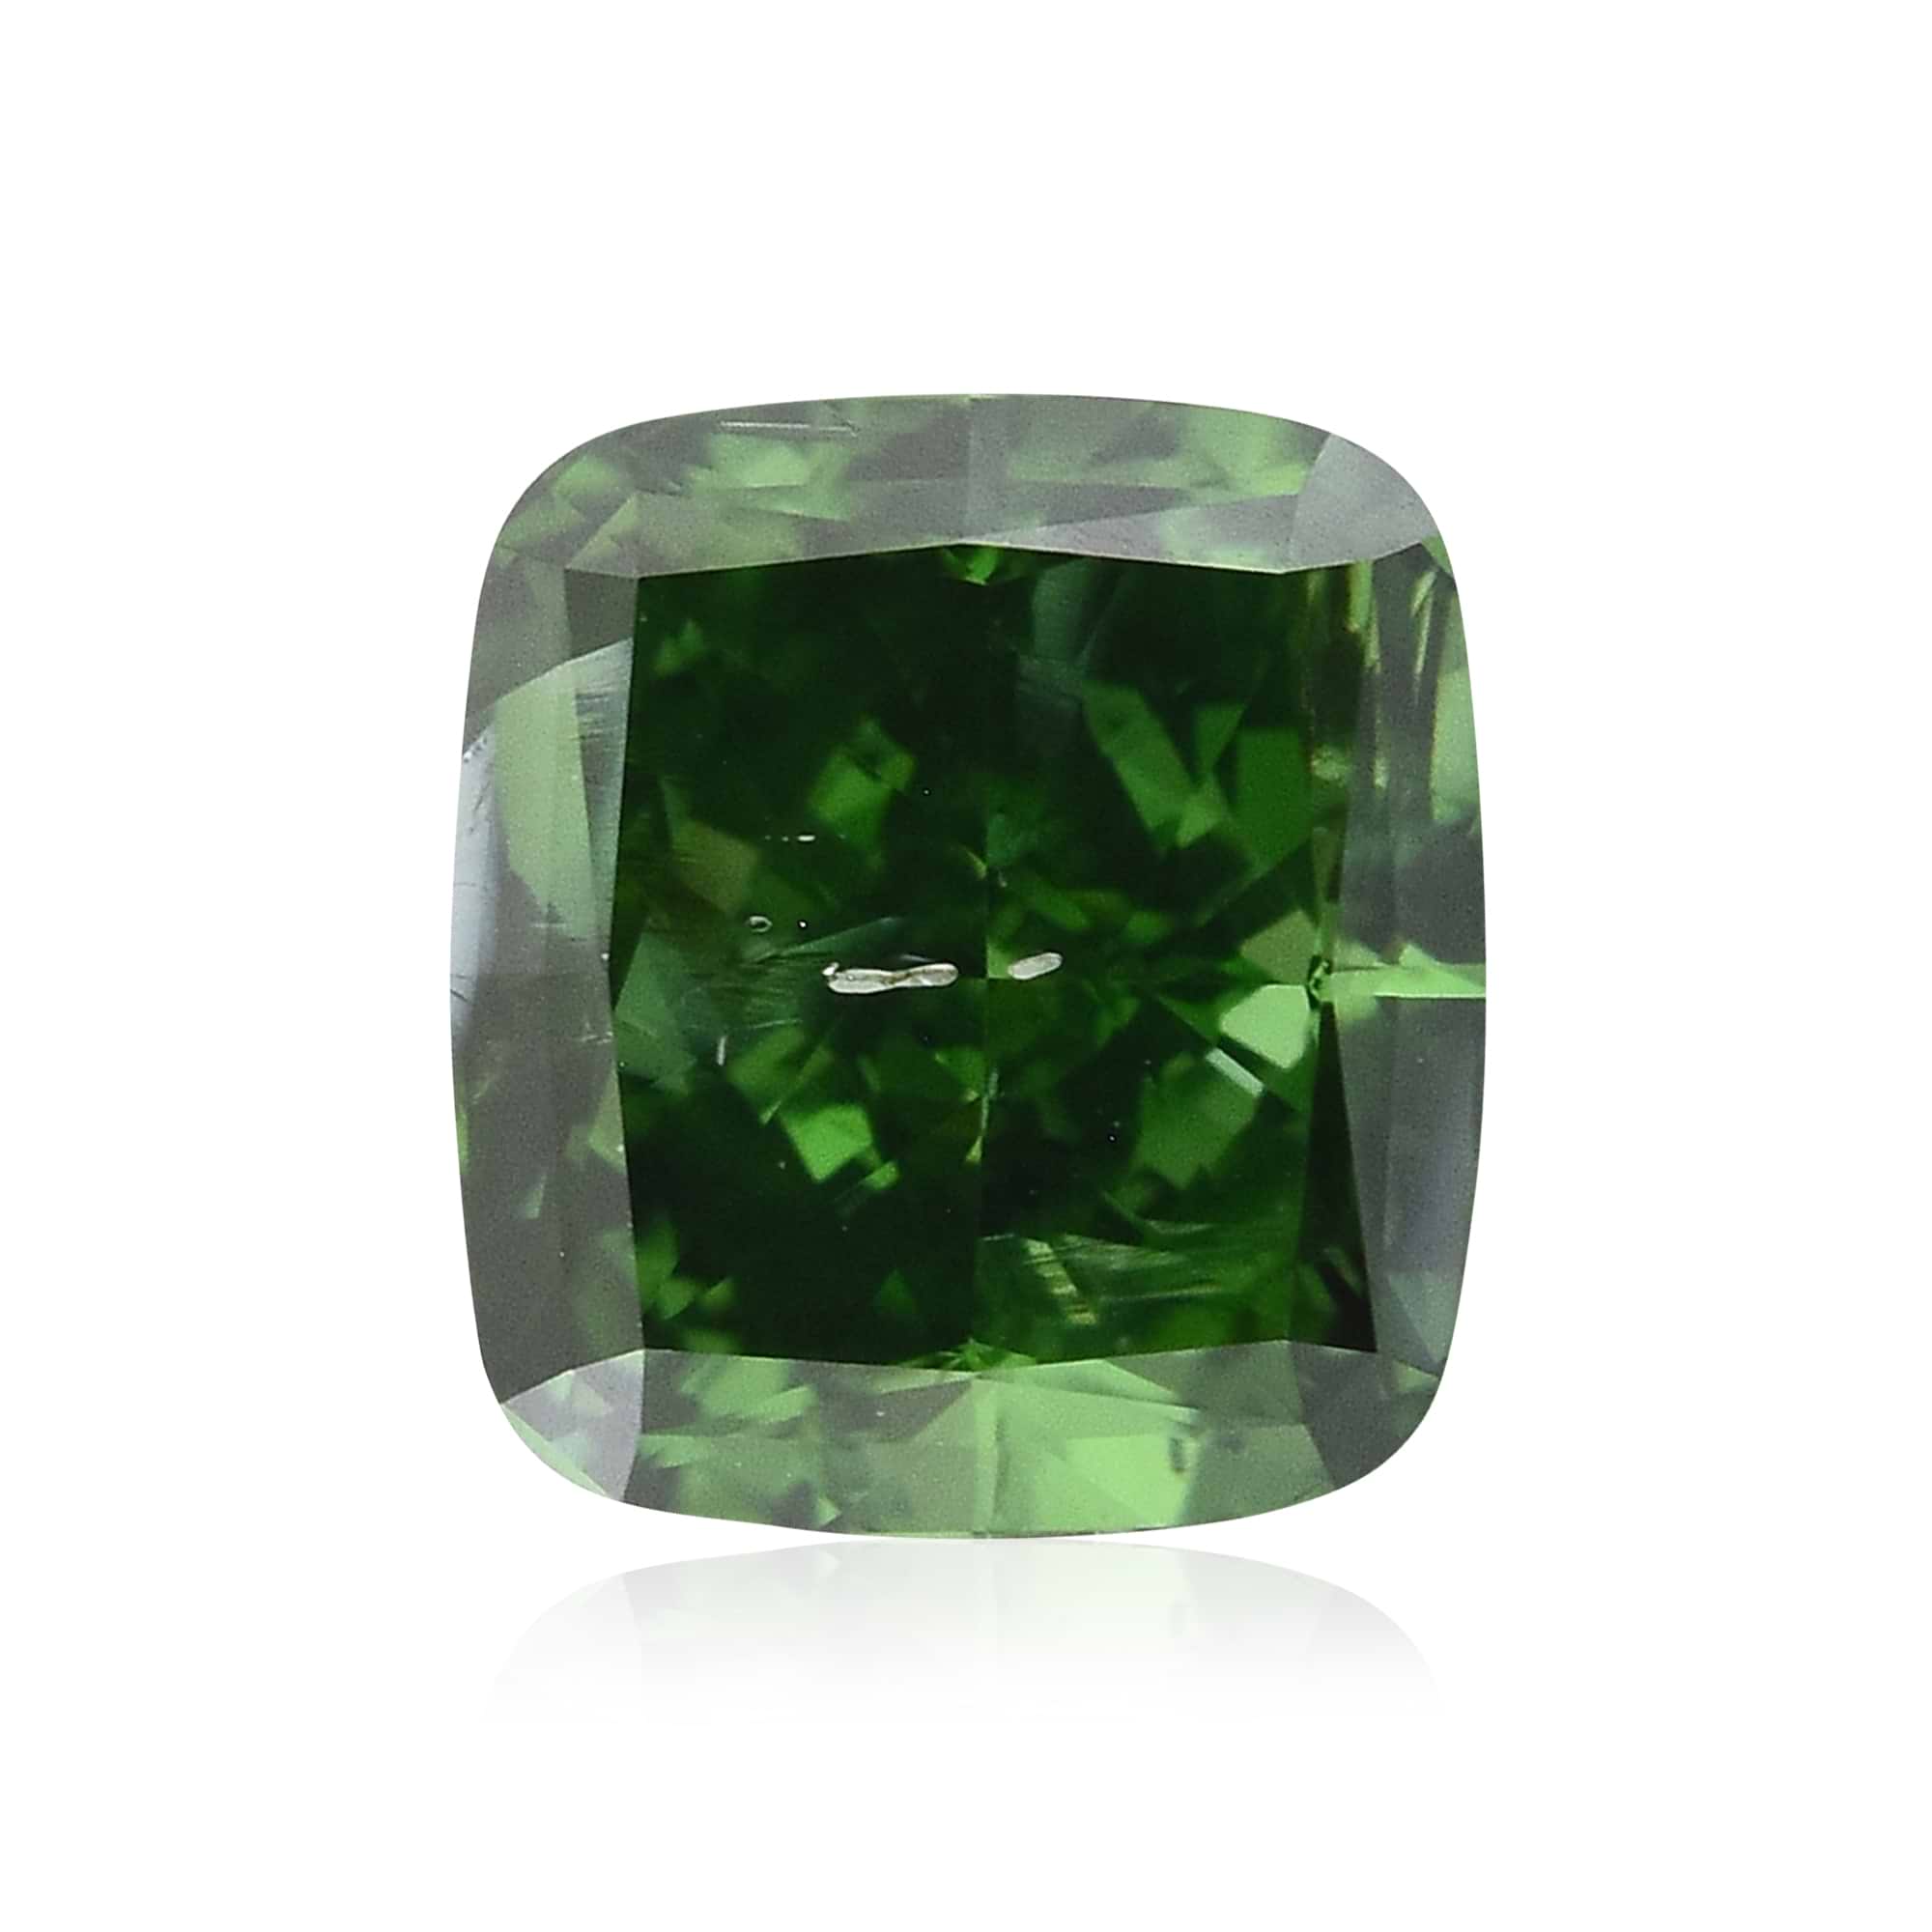 LEIBISH 0.50 carat, Fancy Deep Green Diamond, Cushion Shape, I2 Clarity